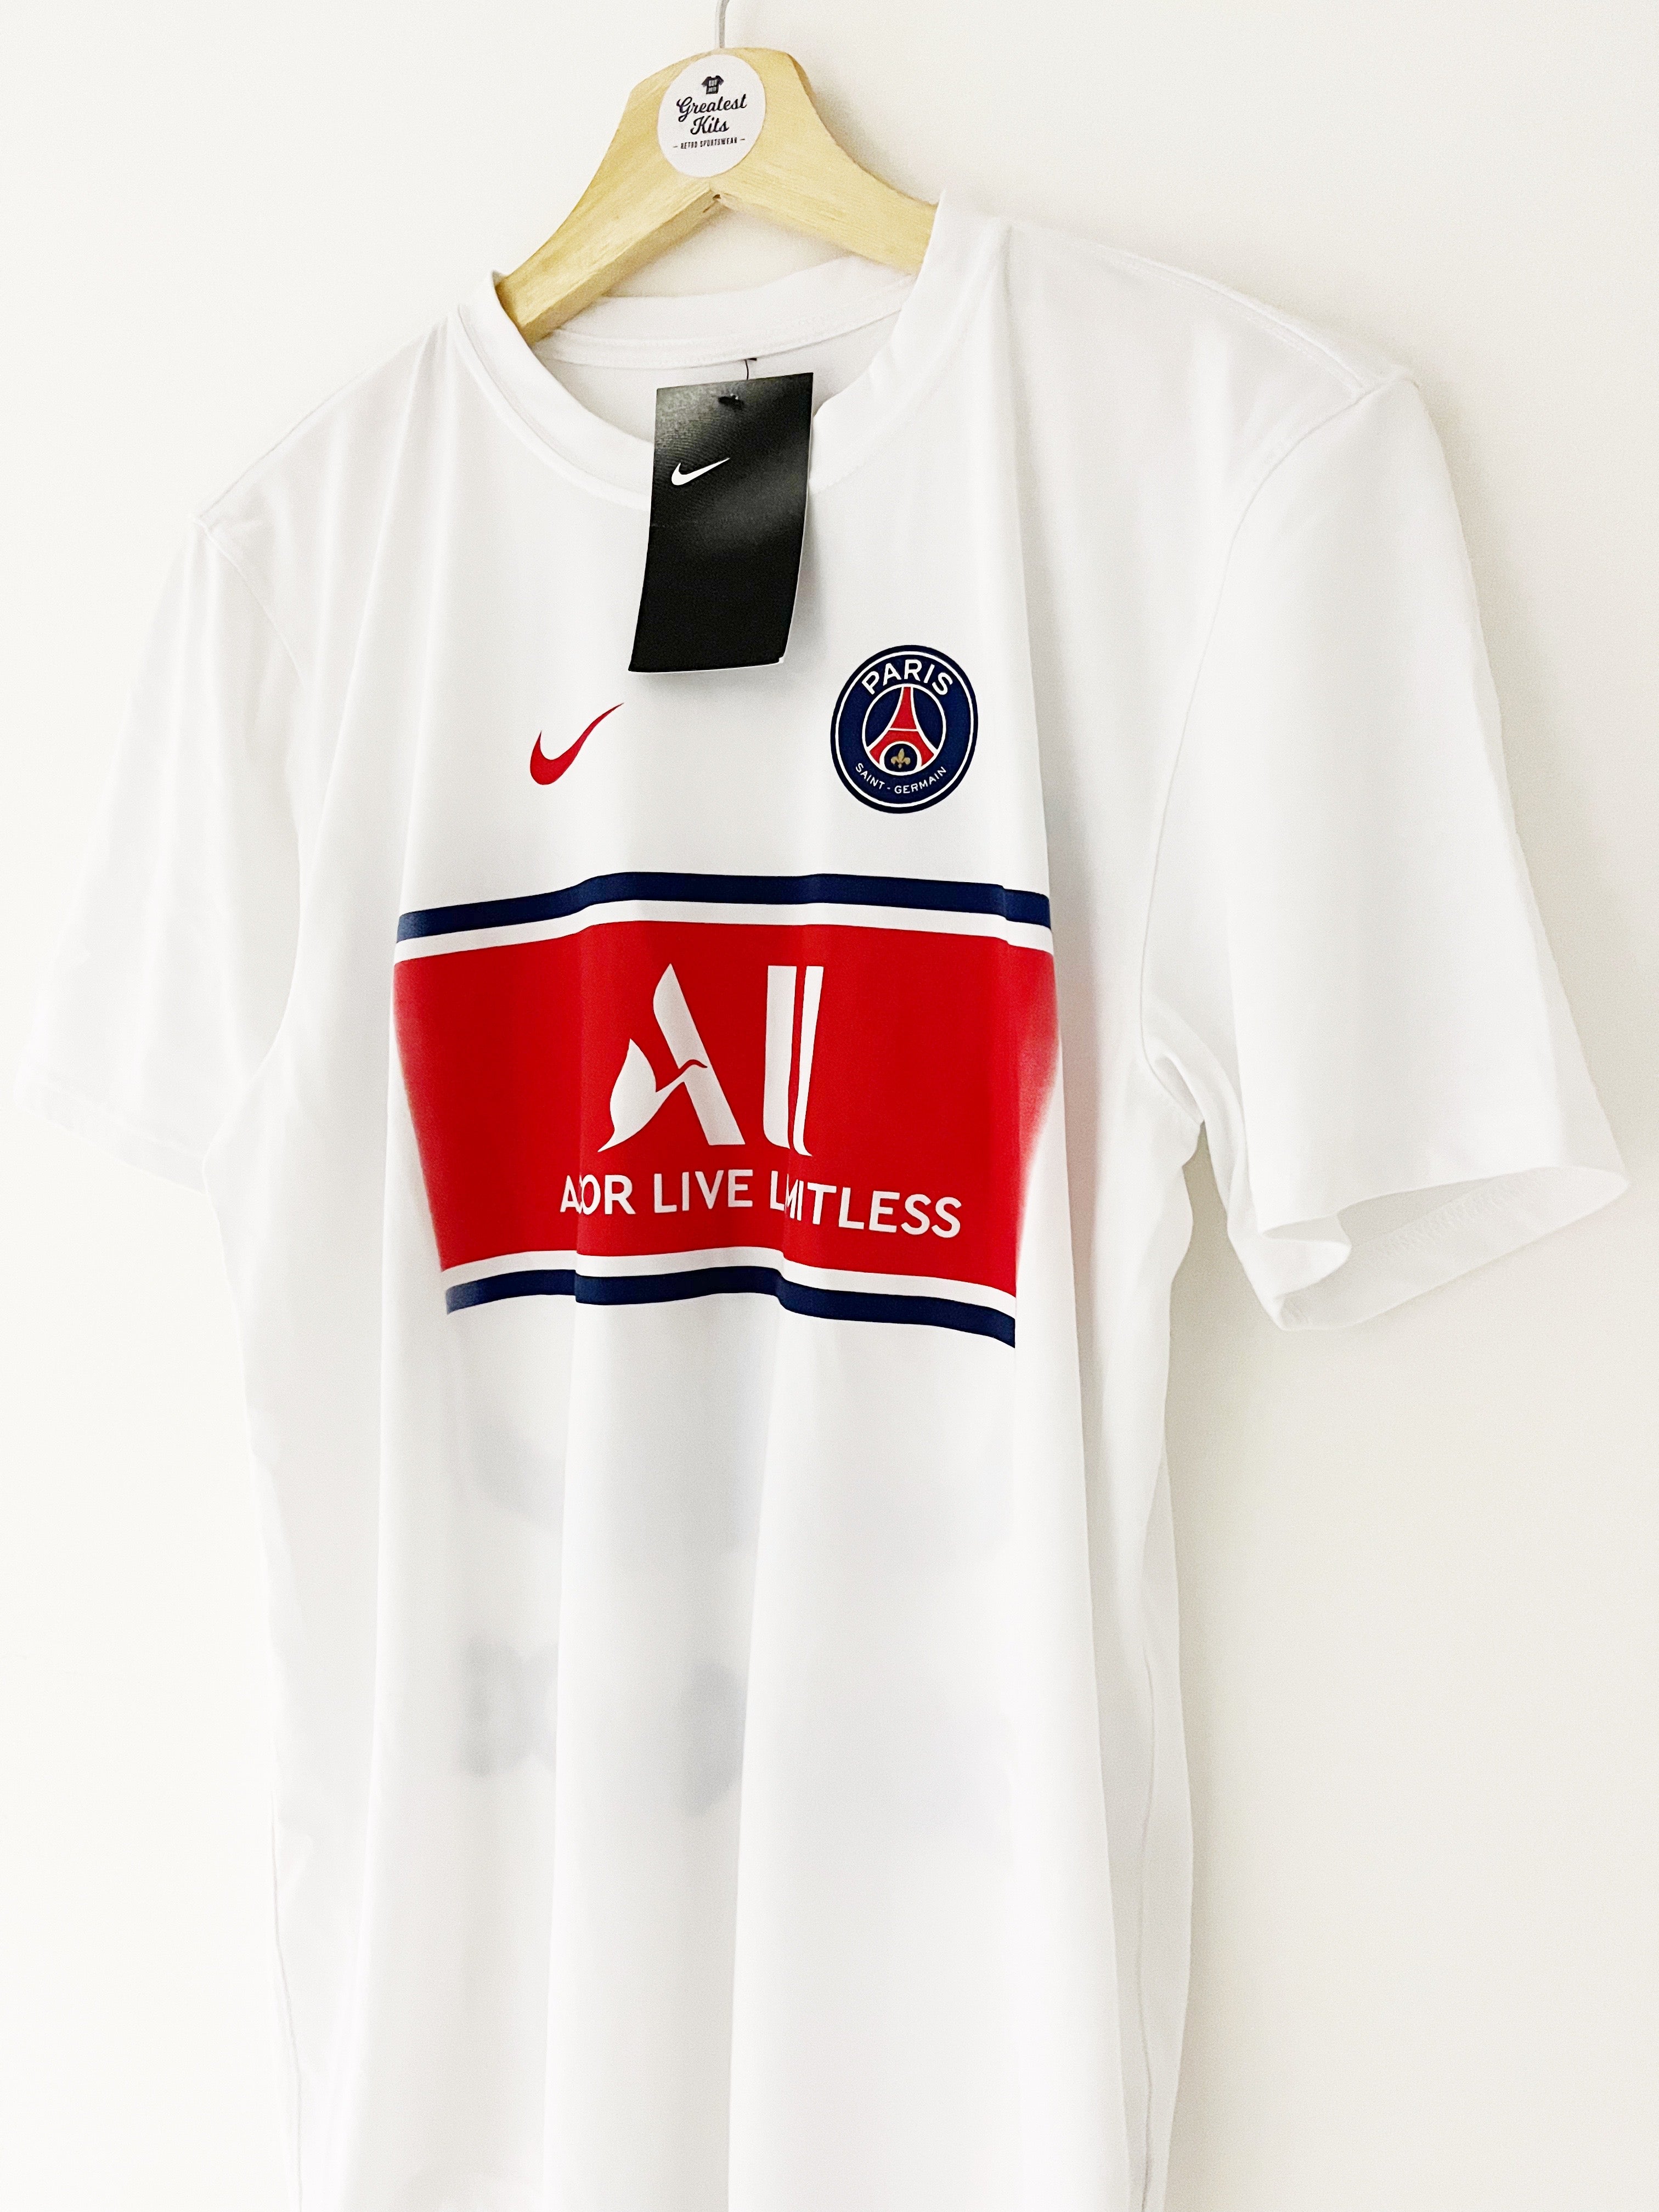 2020/21 Paris Saint-Germain Fan T-Shirt Messi #30 (M) BNWT